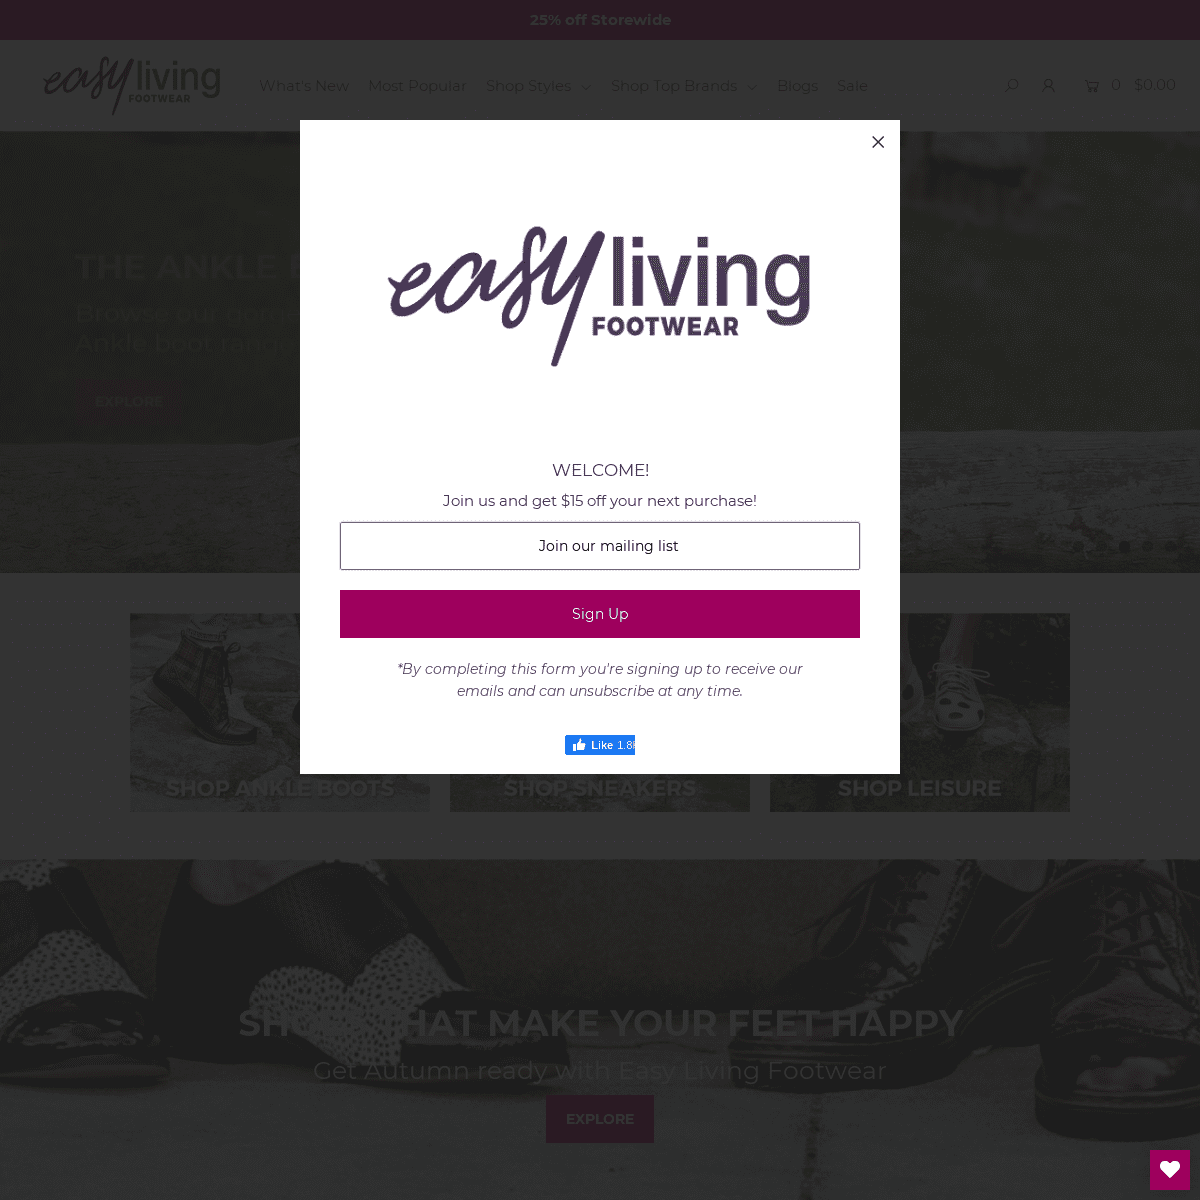 A complete backup of easylivingfootwear.com.au